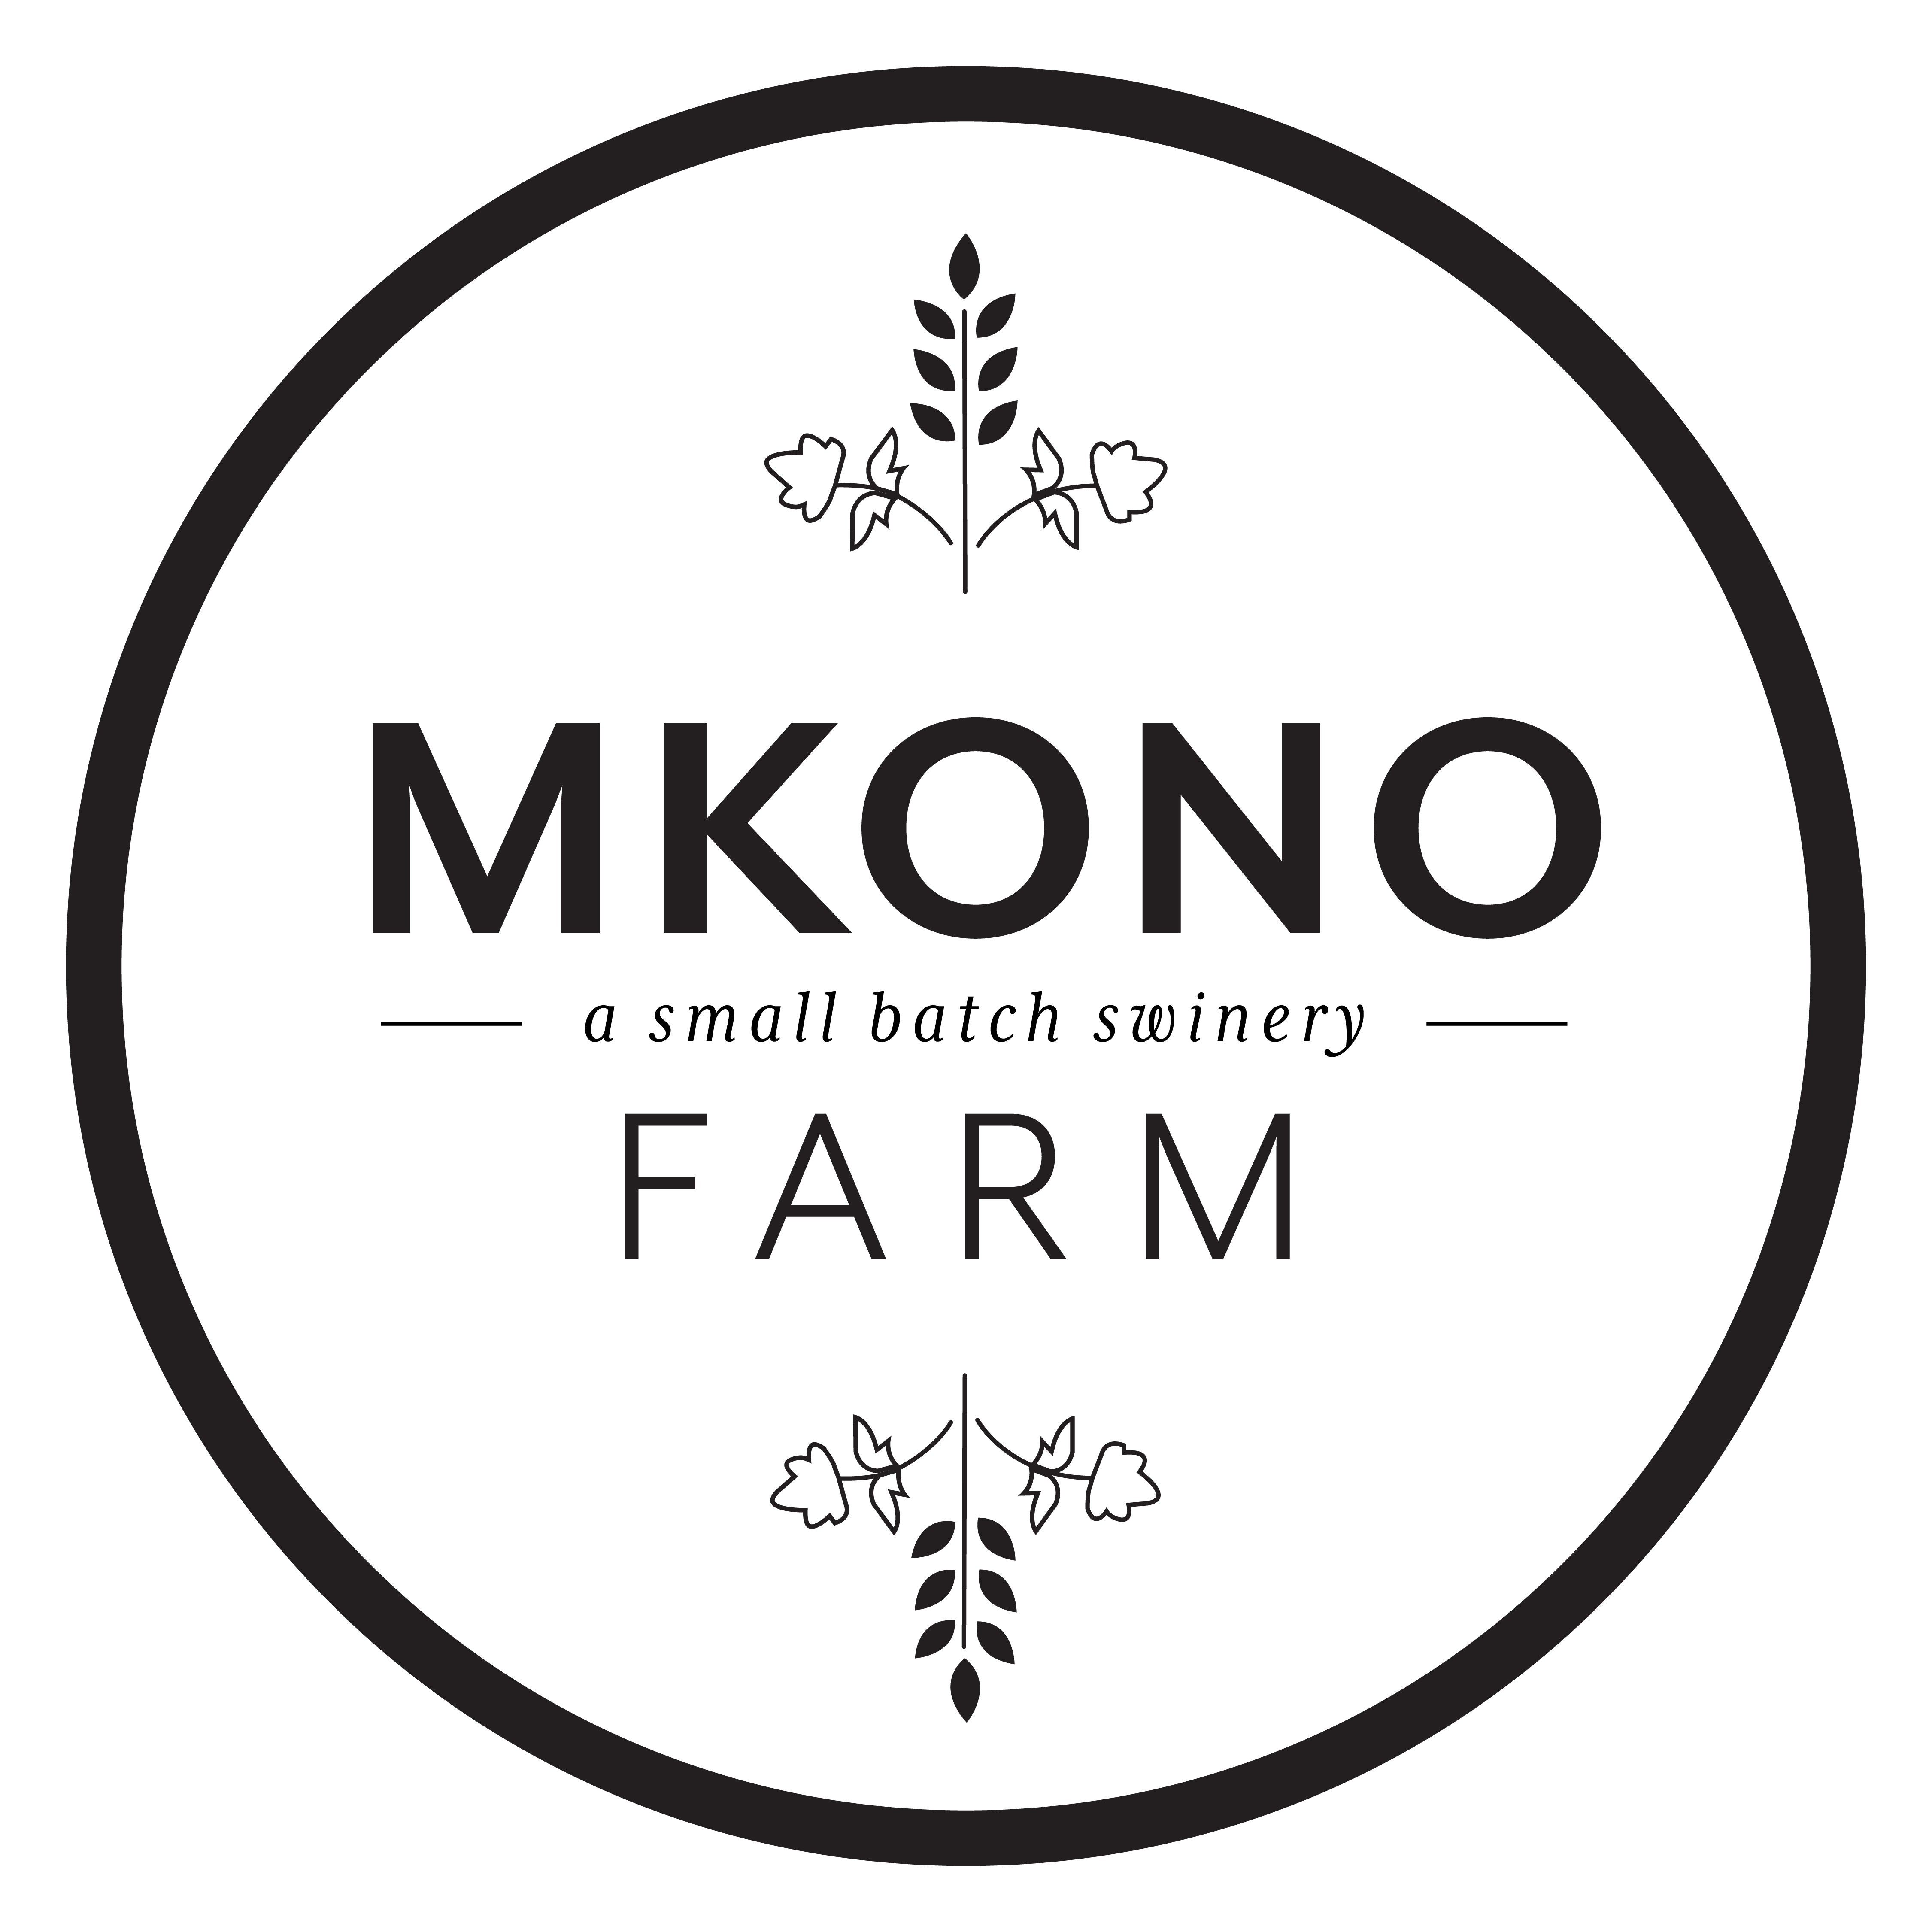  MKONO Farm